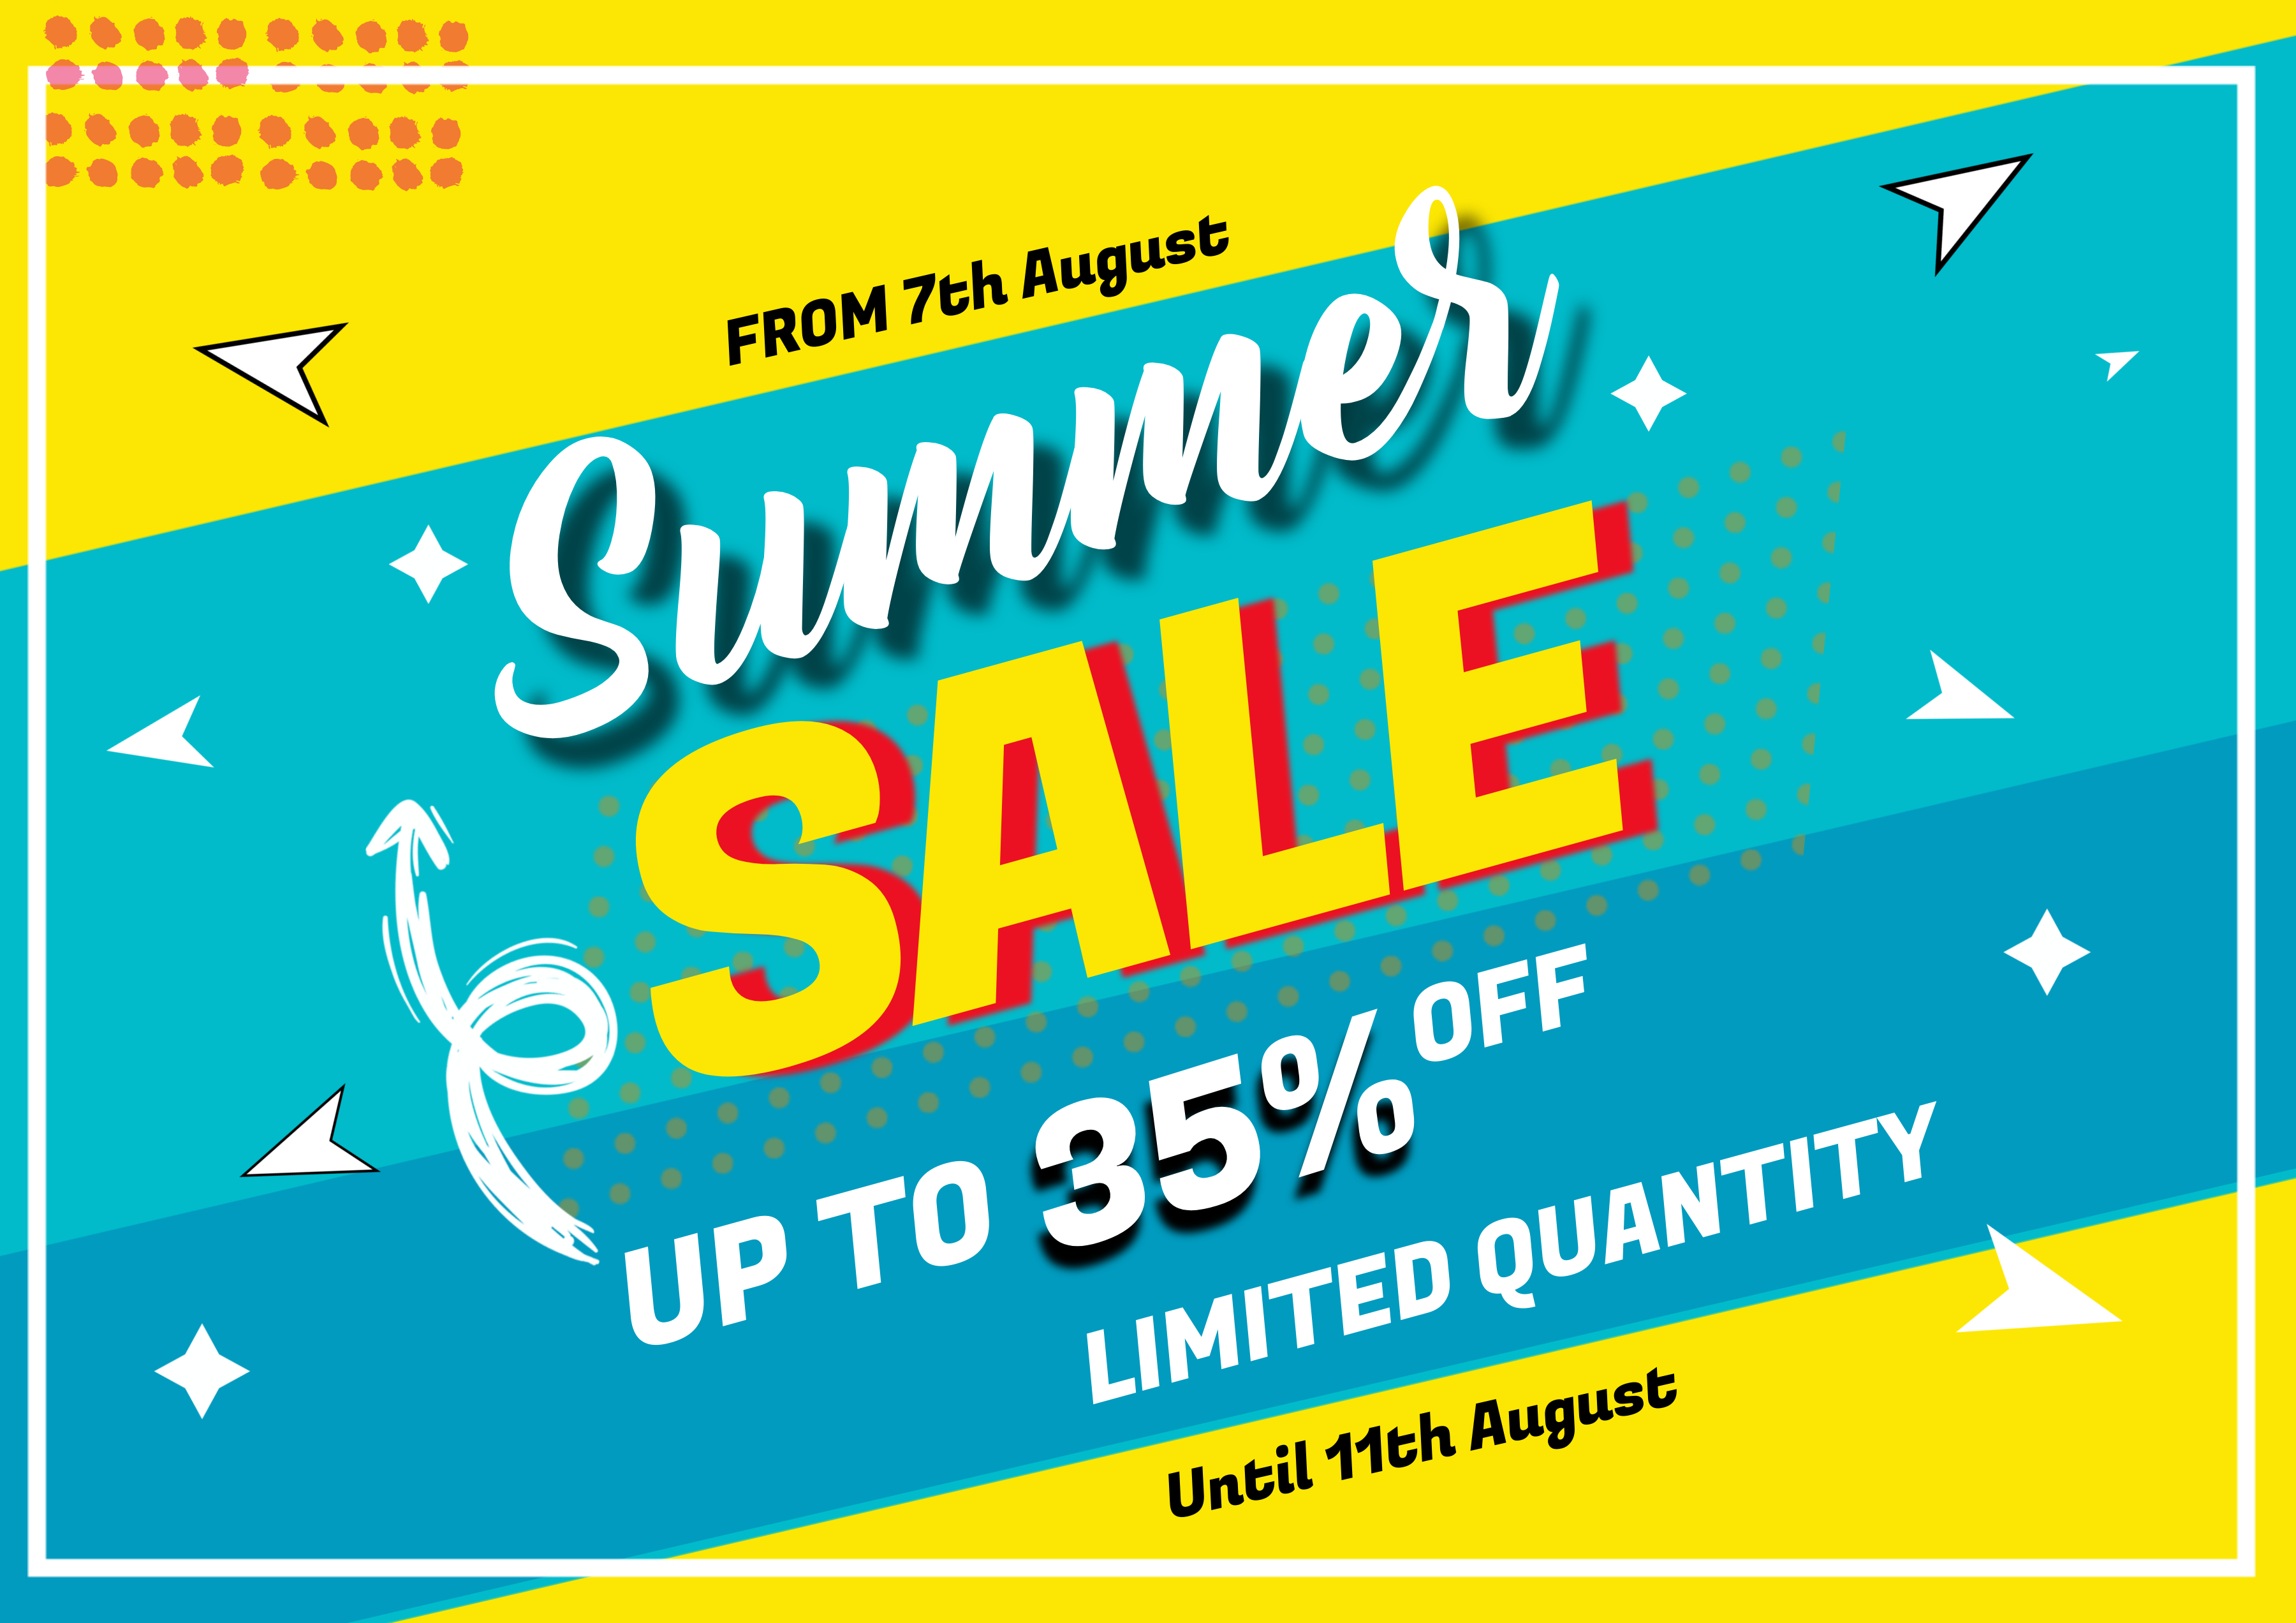 Copy of summer sale offer.jpg